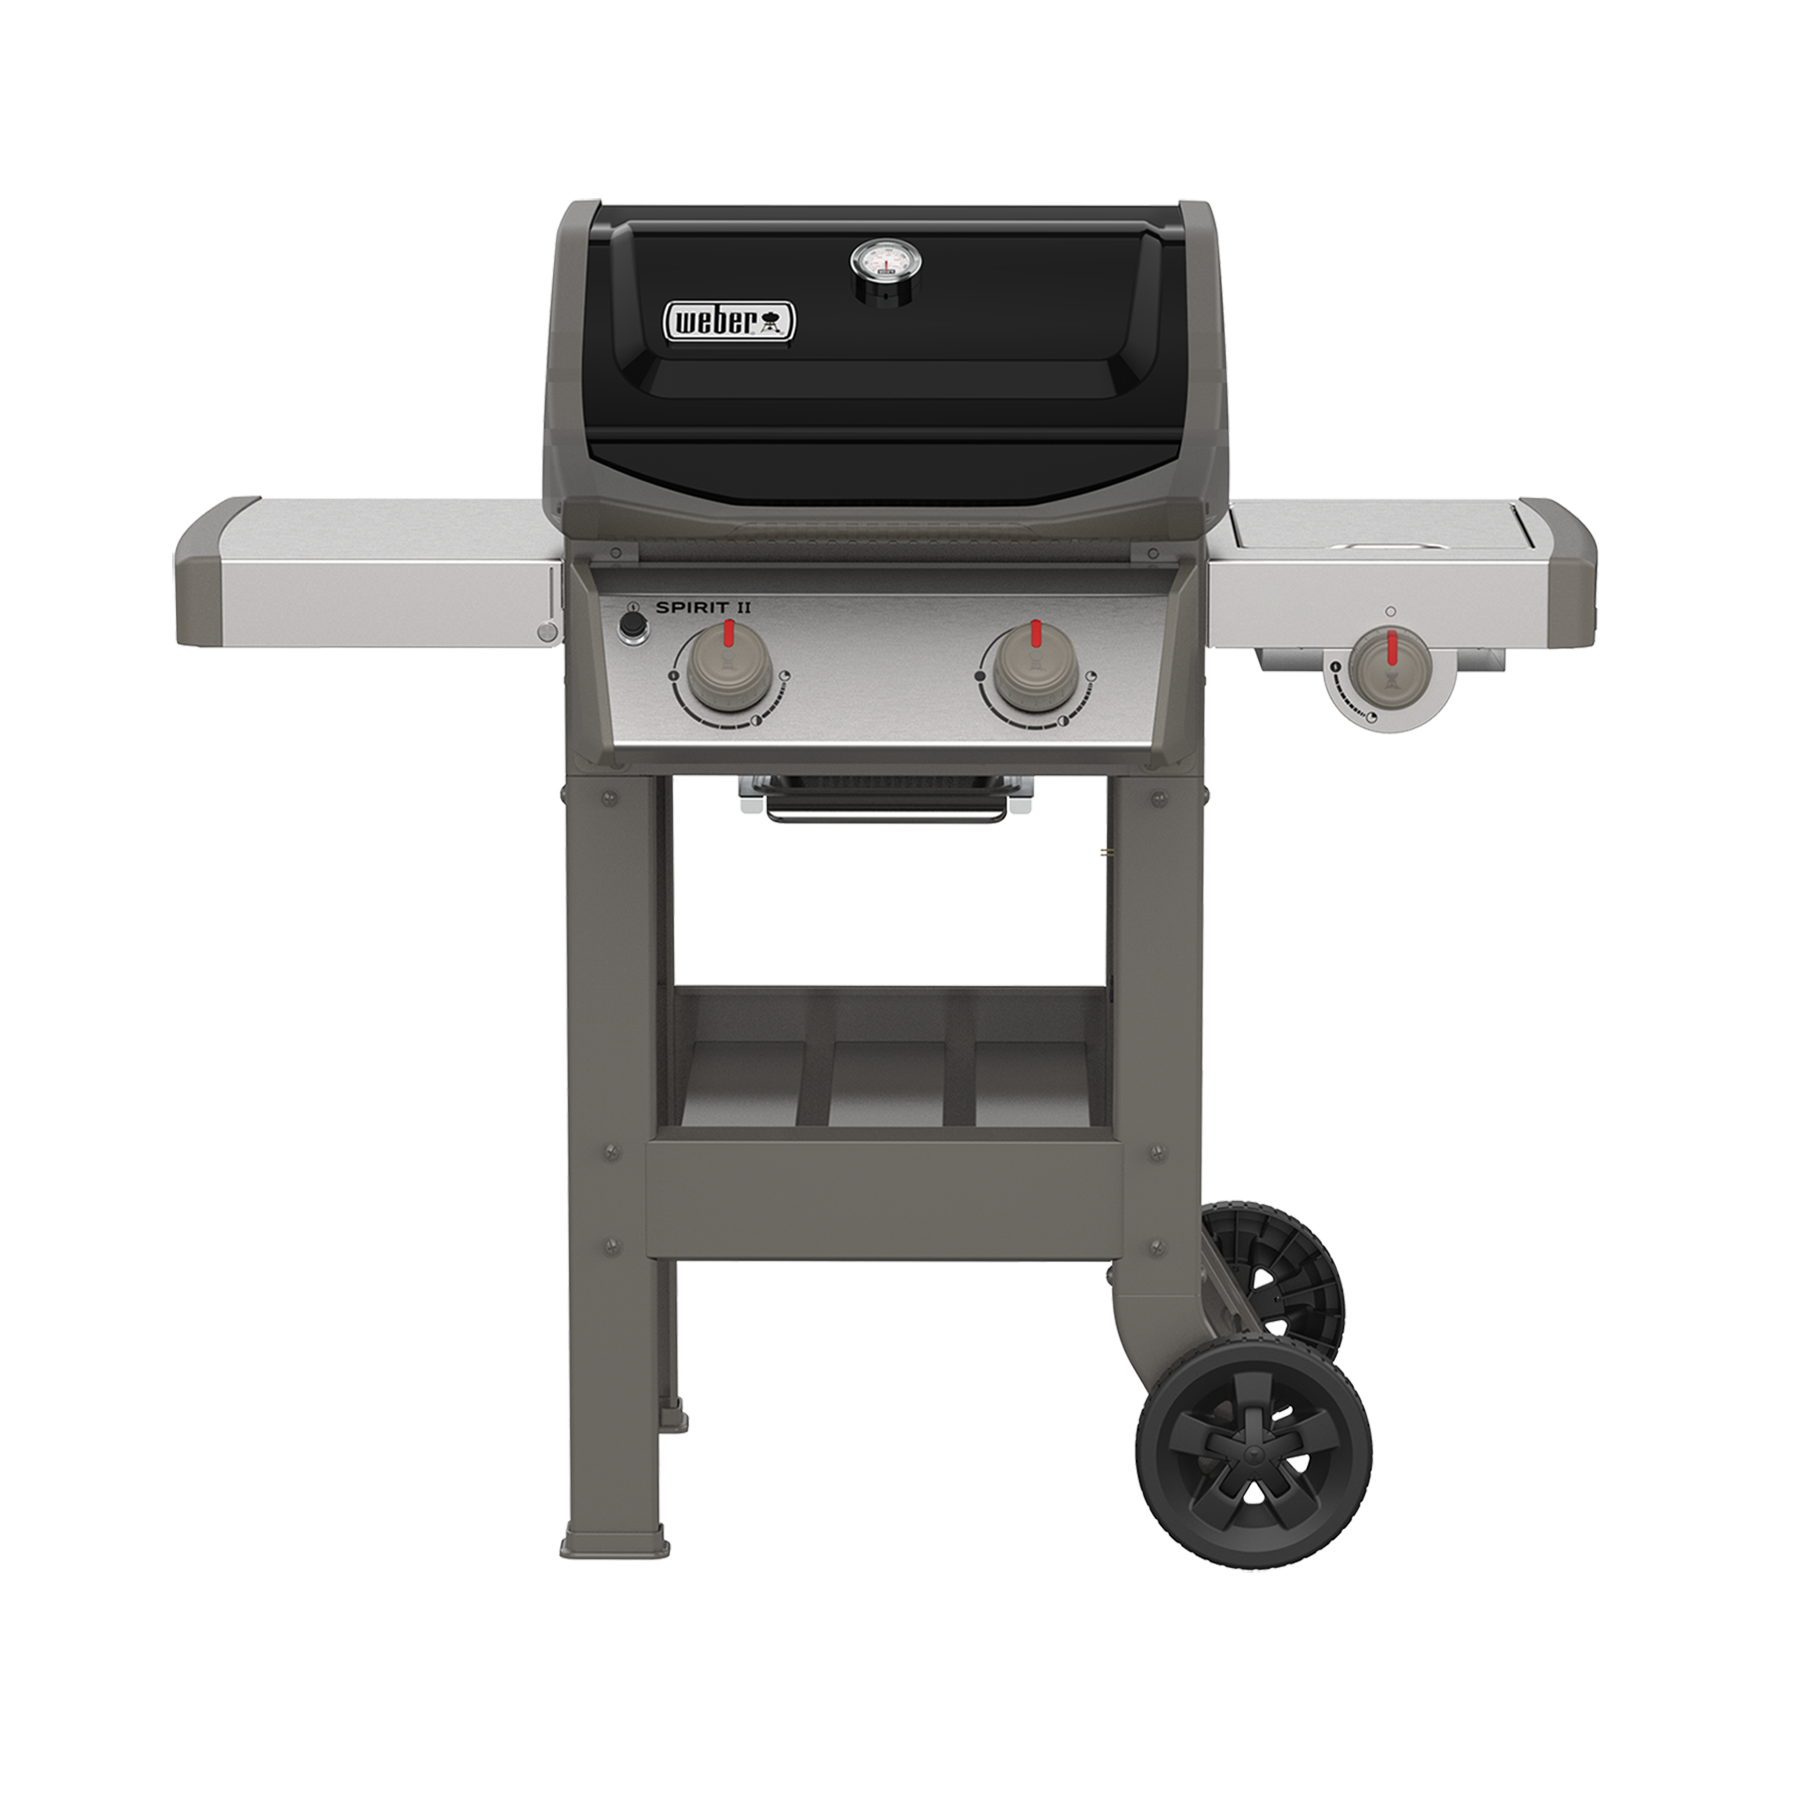 Weber 8417 accessoire de barbecue / grill Support